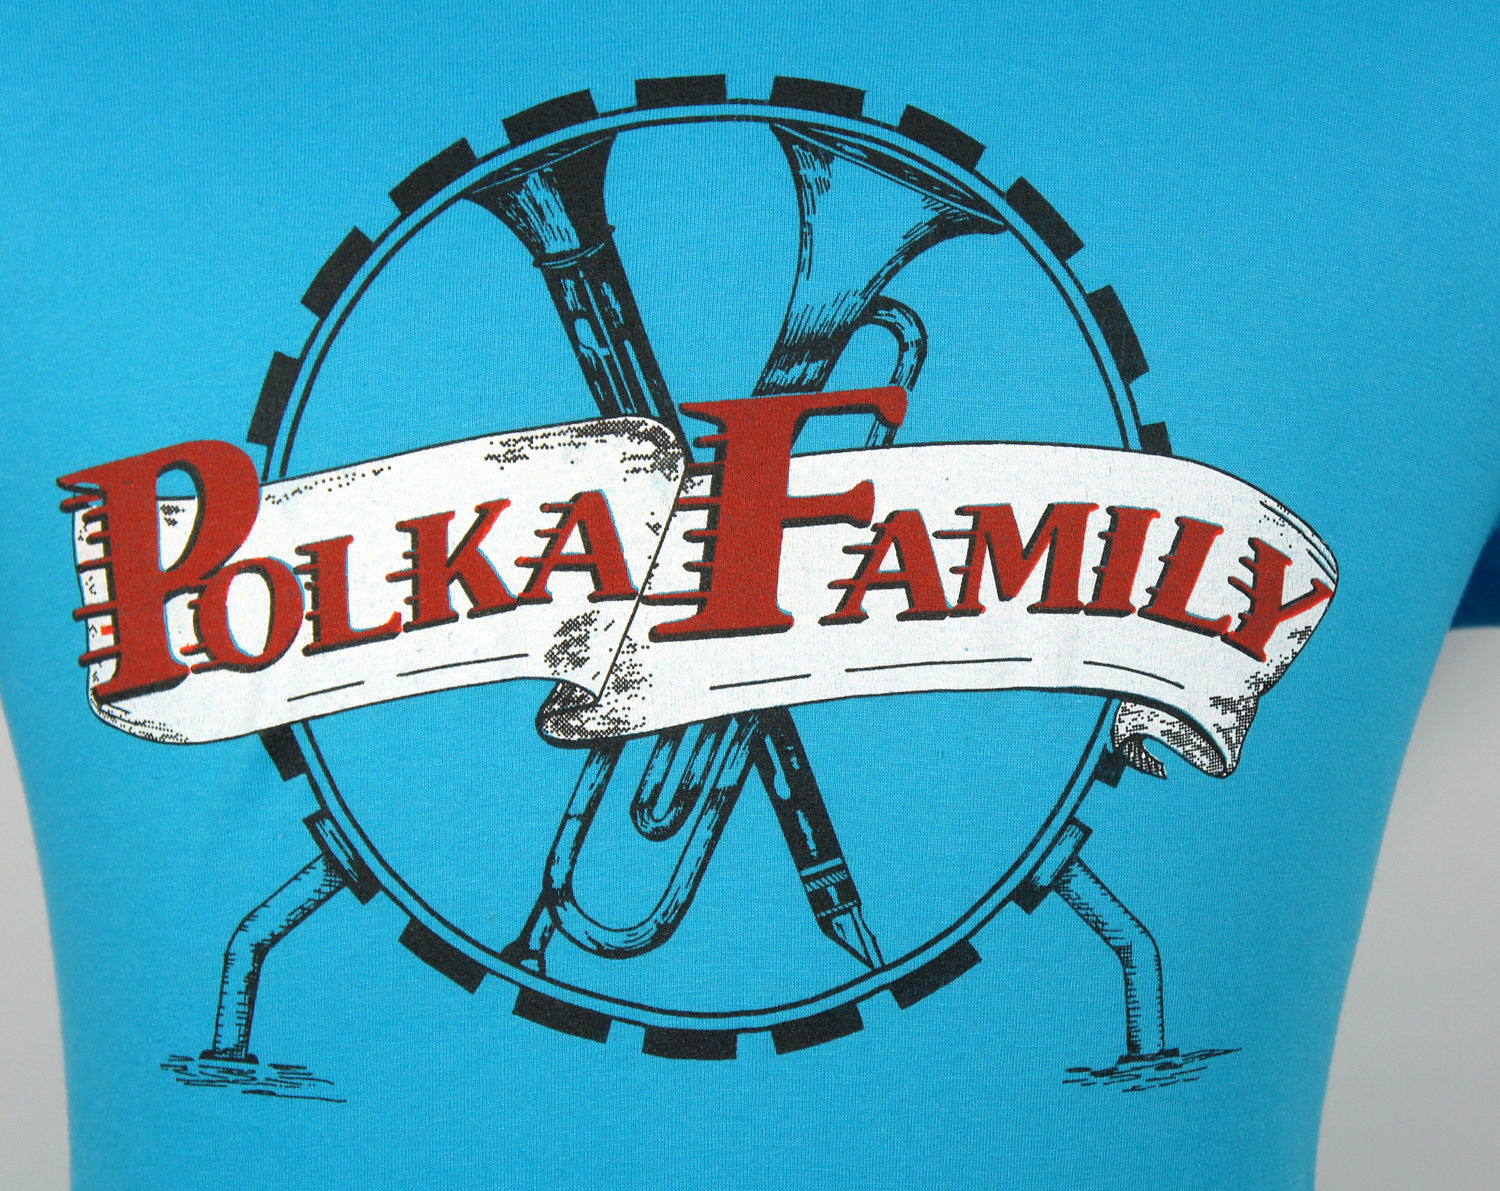 1980's Polka Family Band T-Shirt - Size M